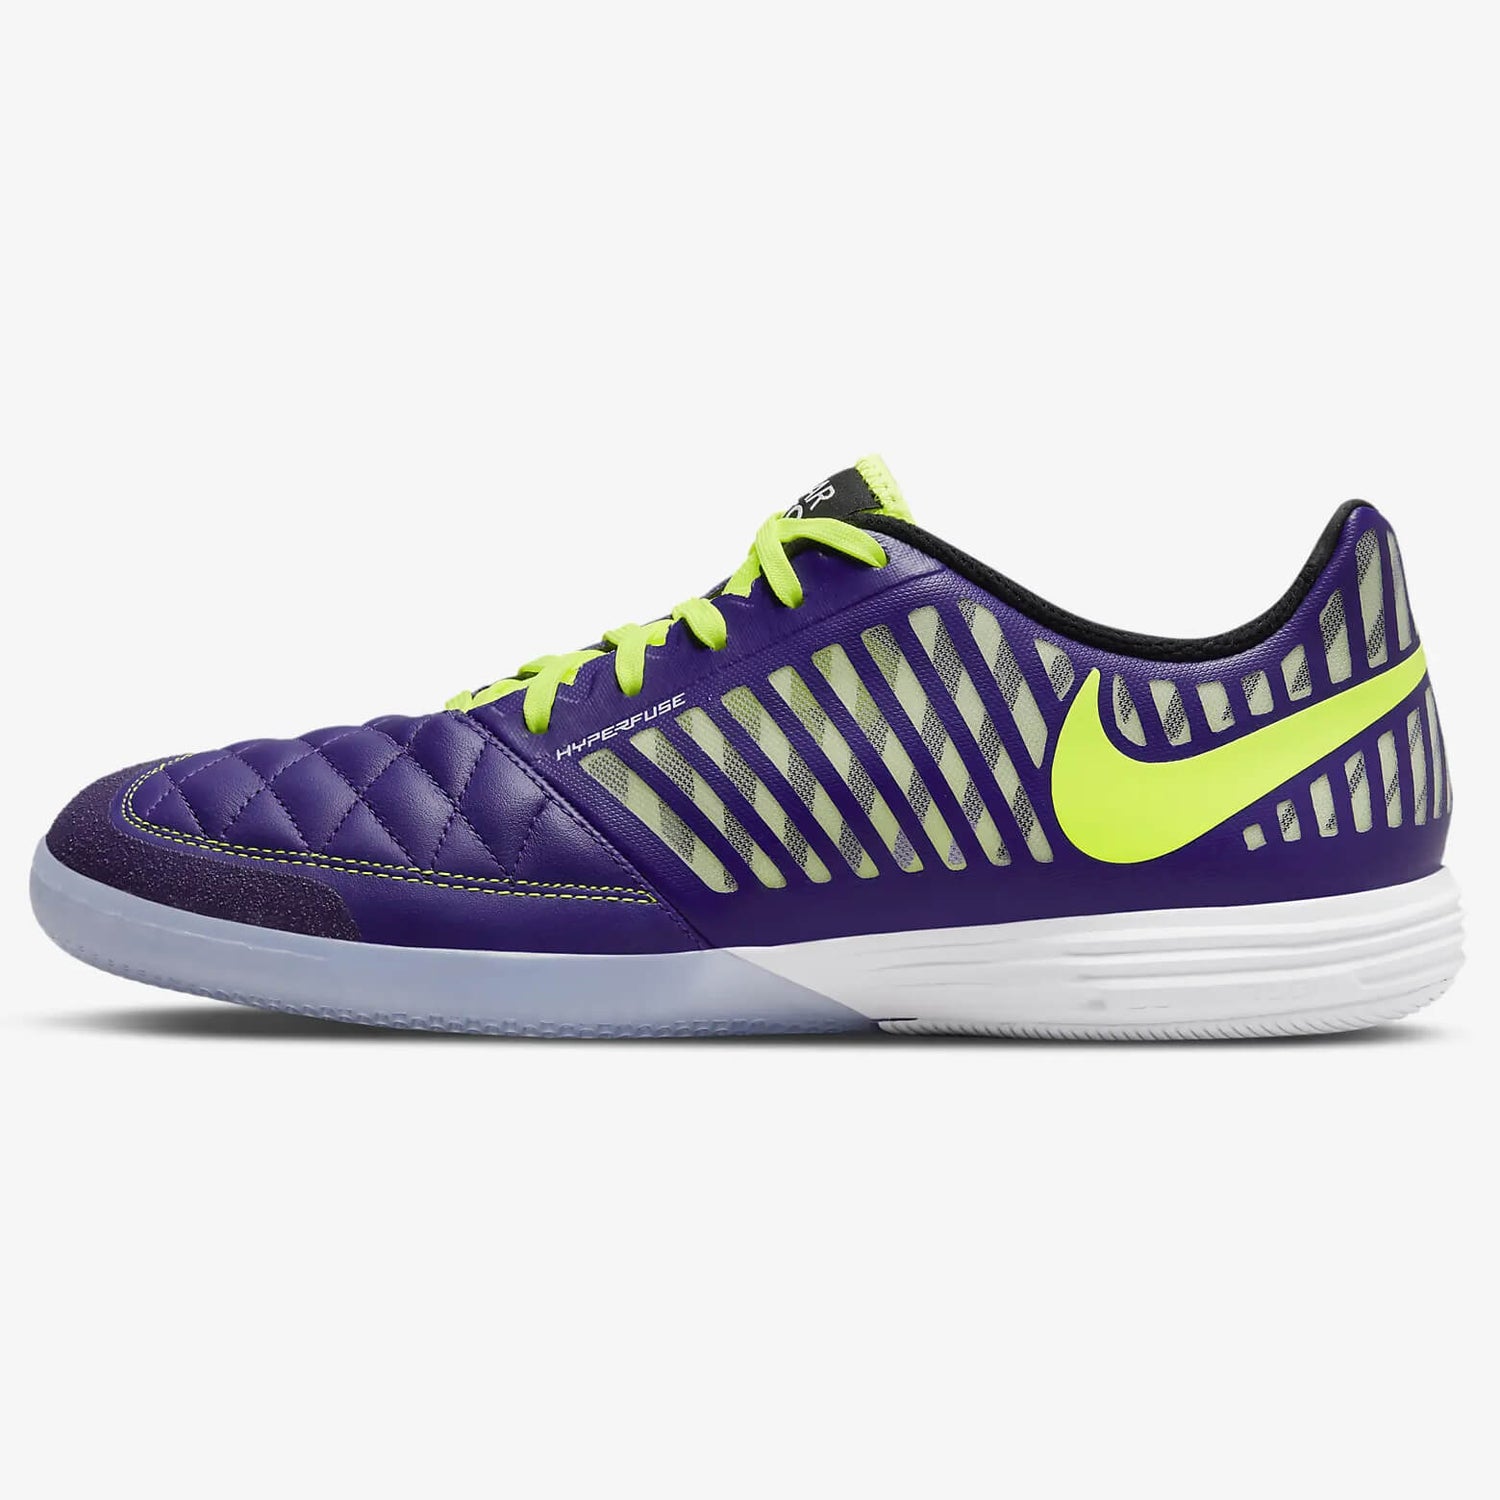 Nike Lunar Gato II Indoor - Purple-Volt